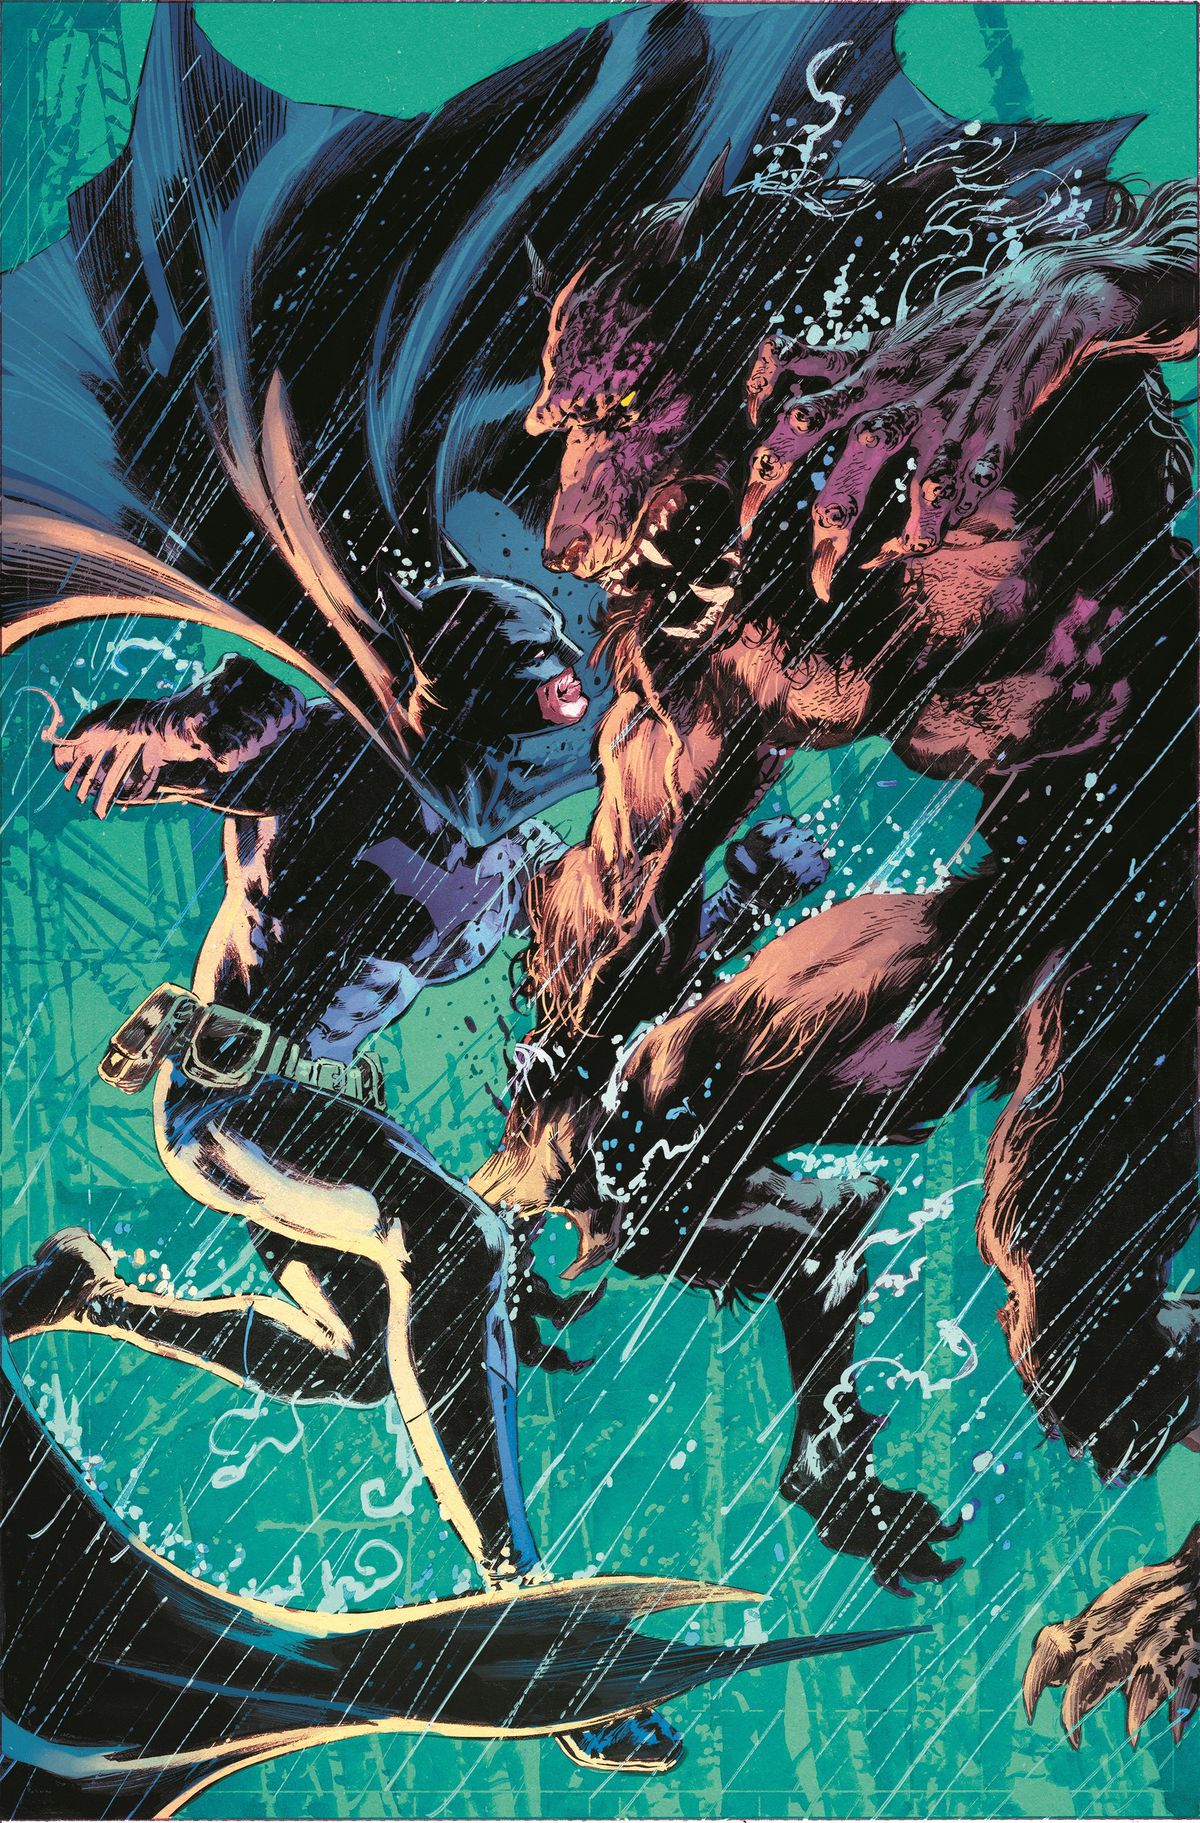 Batman battles a werewolf in the rain in a variant cover of Batman: Full Moon.